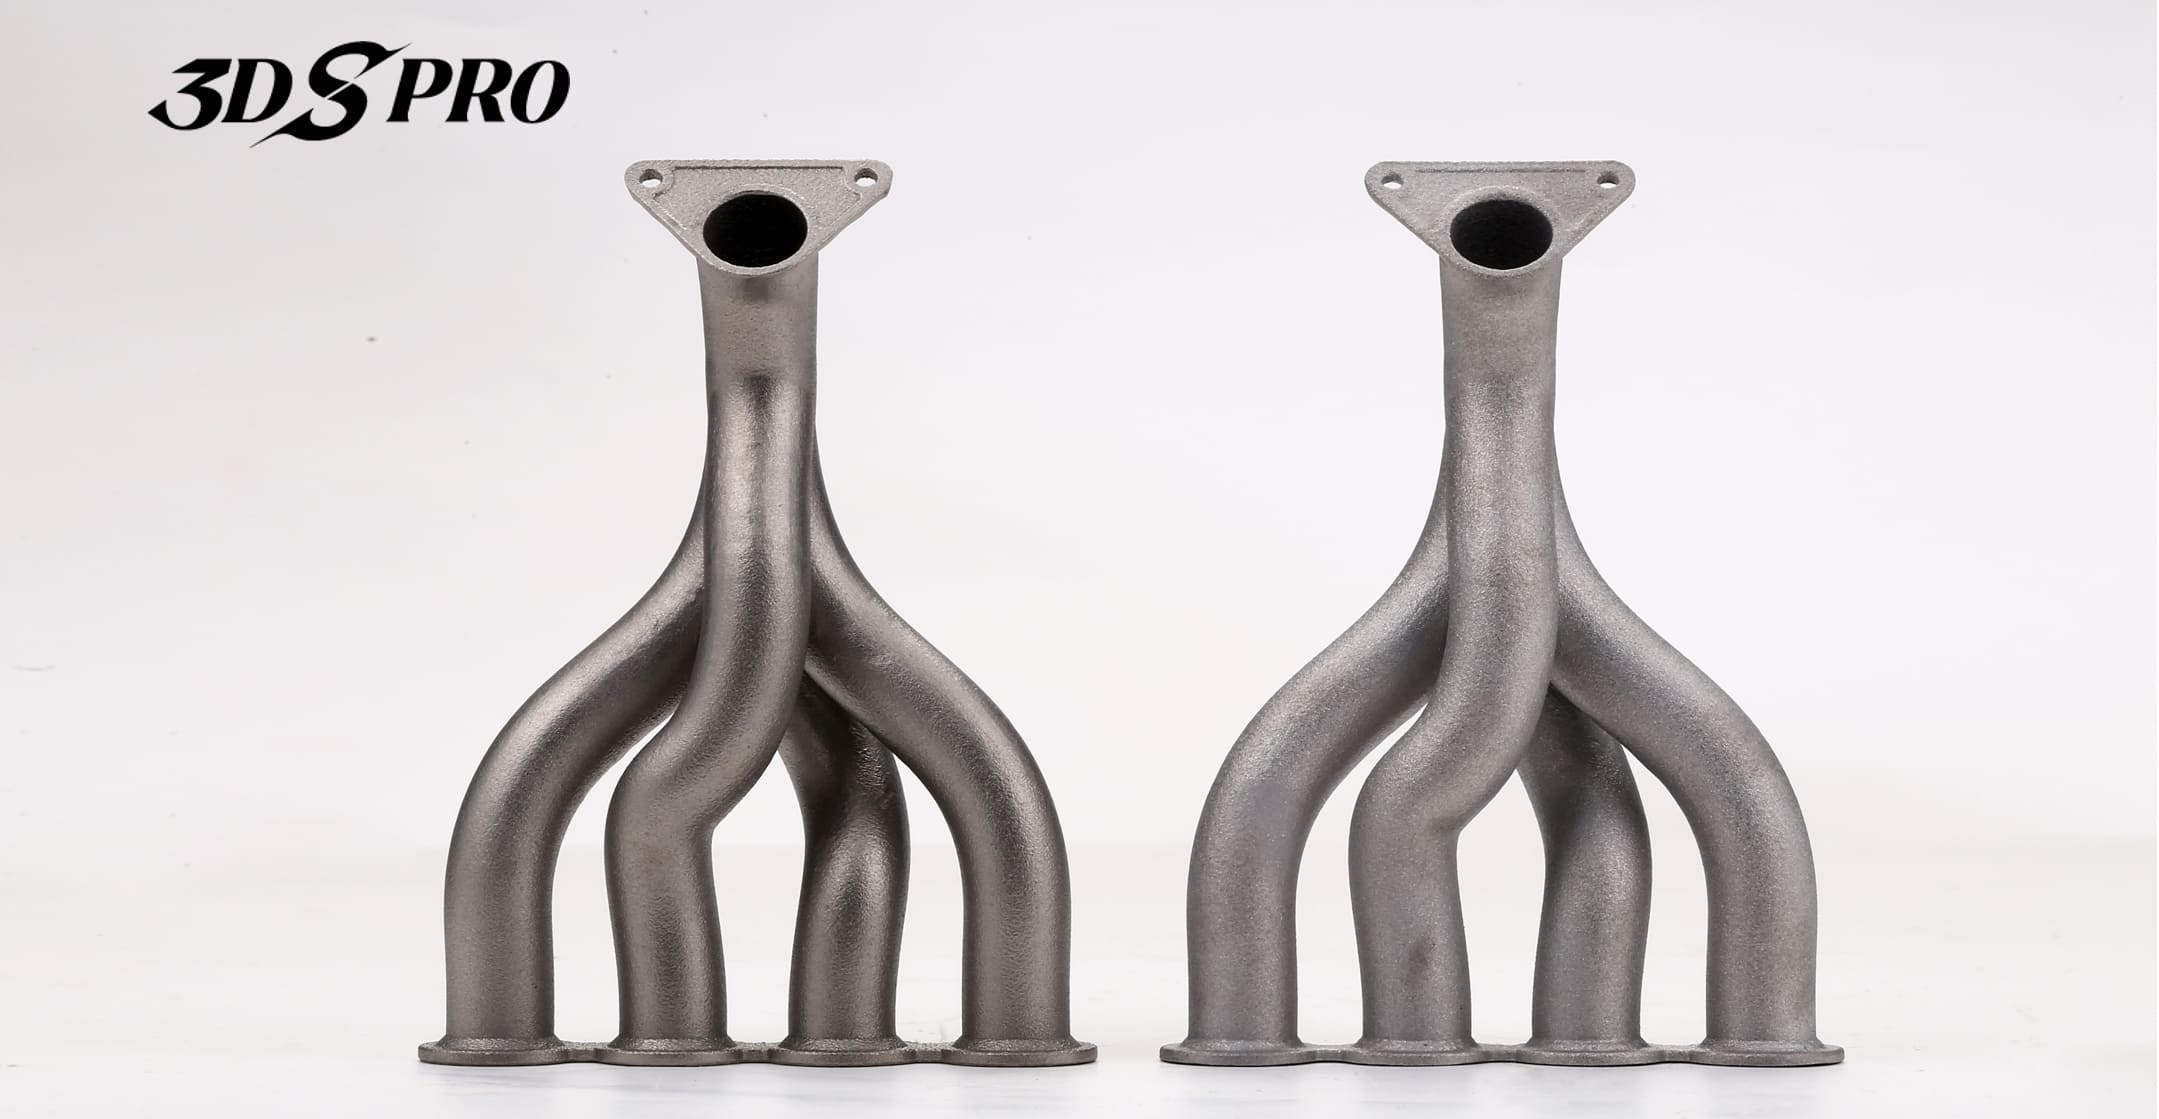 Metal 3D printed manifolds